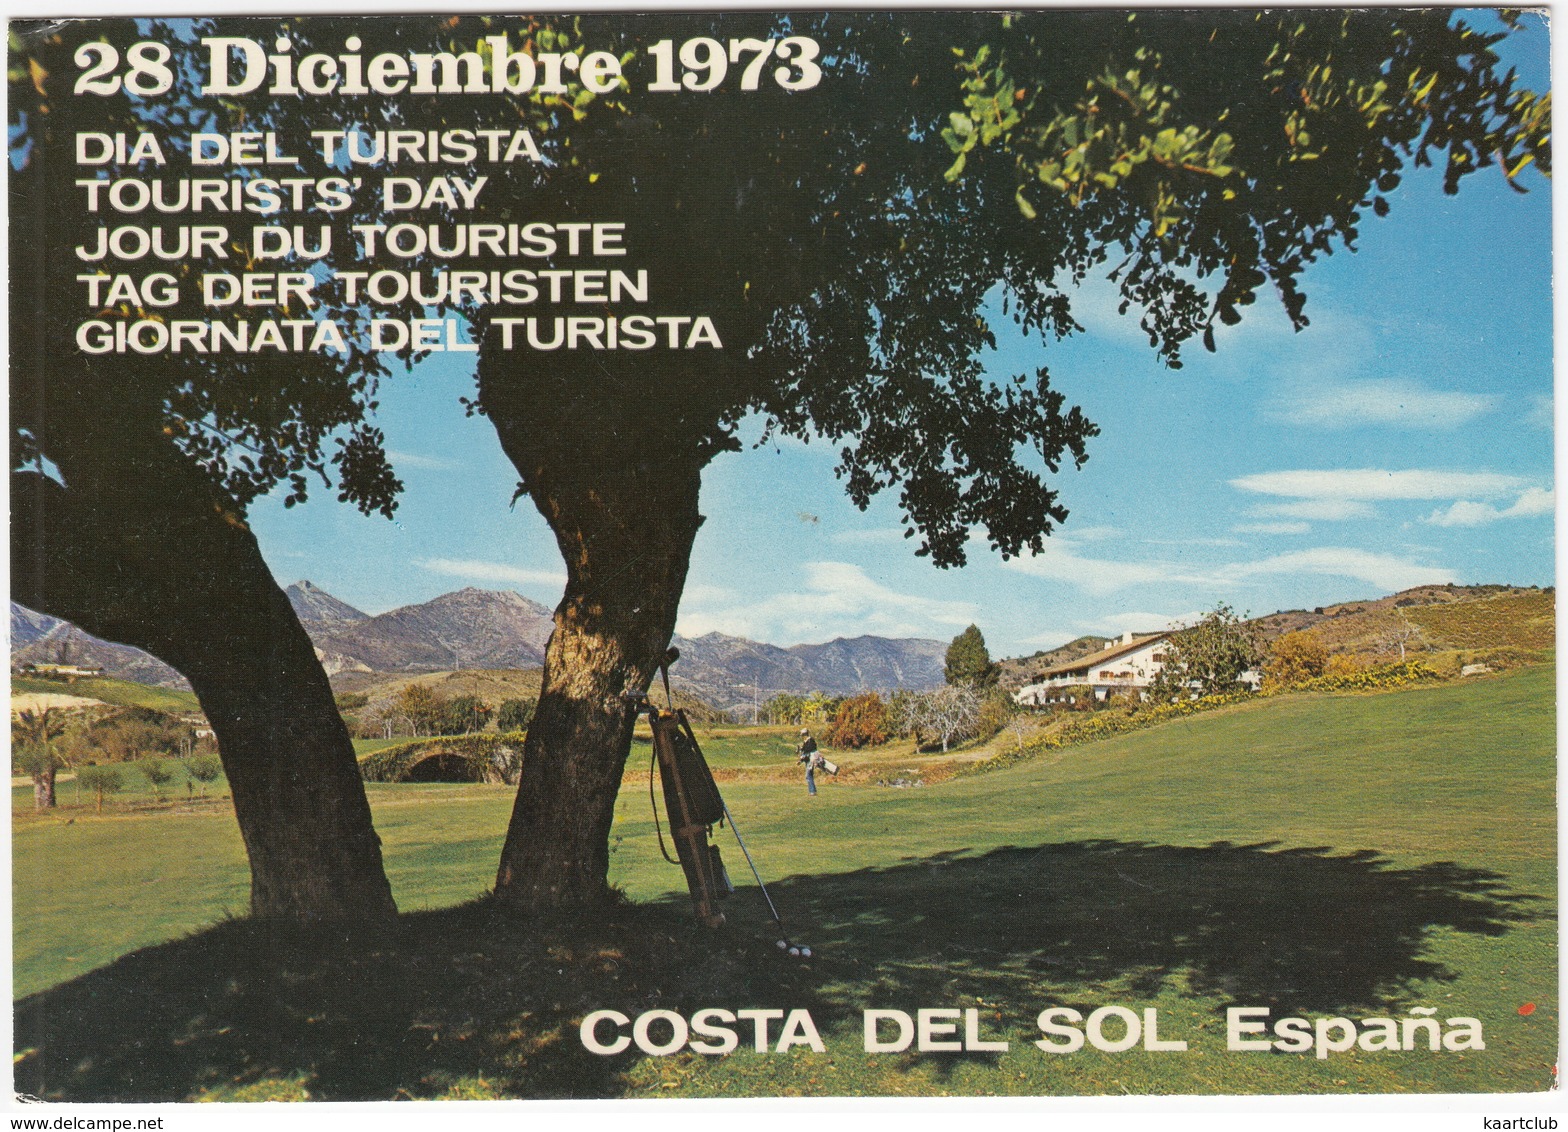 GOLF: CAMPO De GOLF- Costa Del Sol - 28 Diciembre 1973 - Dia Del Turista - (Espana/Spain) - Golf